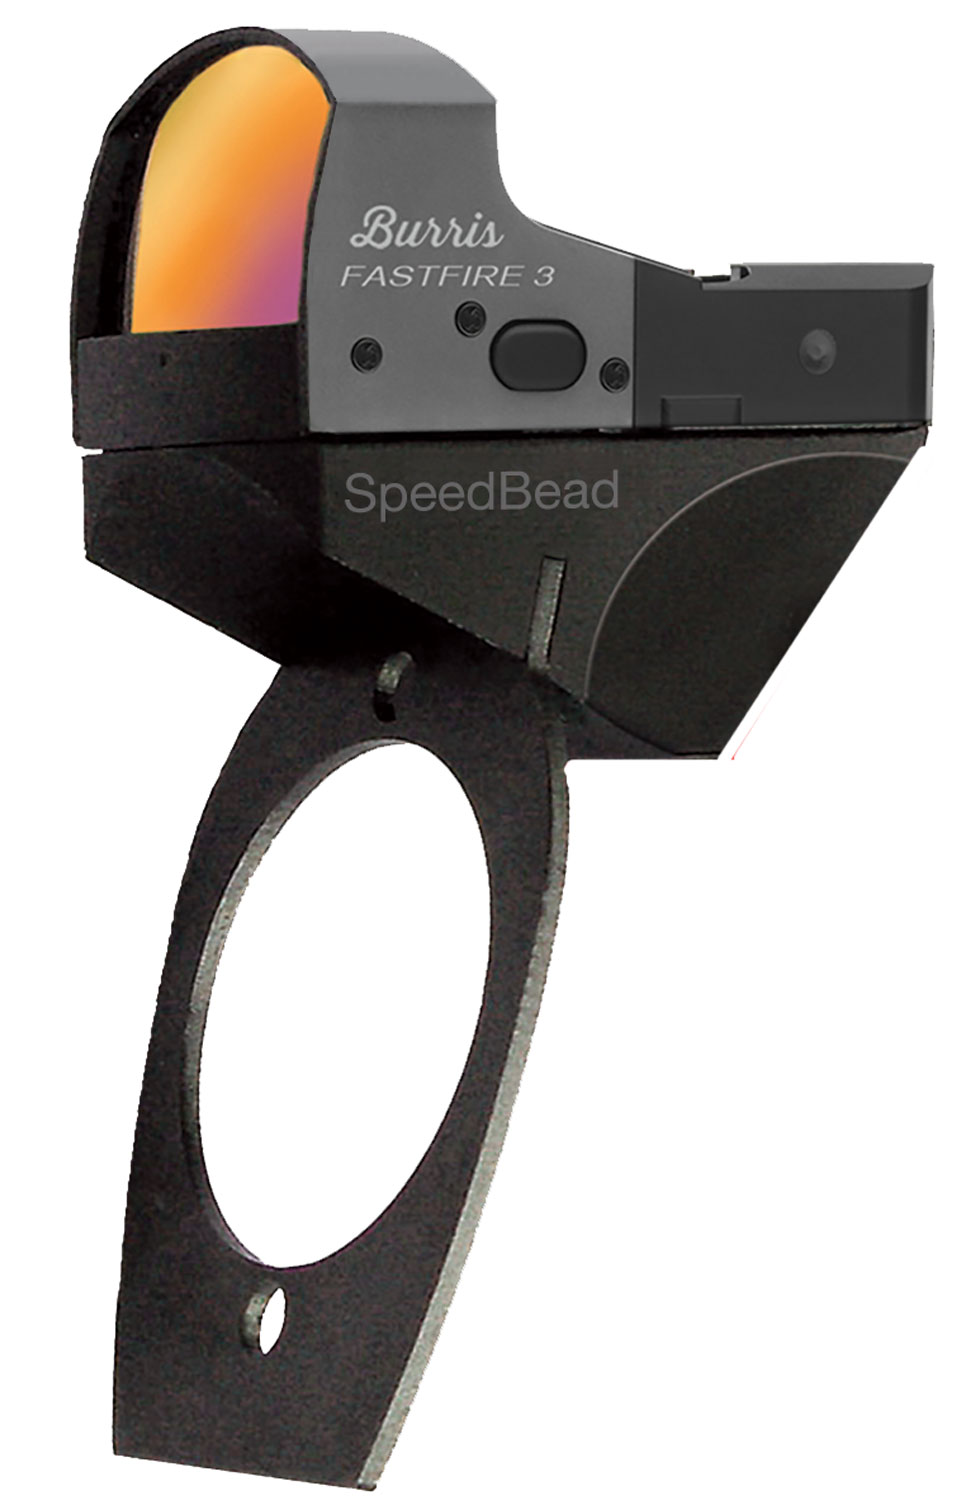 Burris 300240 SpeedBead Mount with Burris FastFire 3  Matte Black 1x21x15mm 8 MOA Dot Reticle